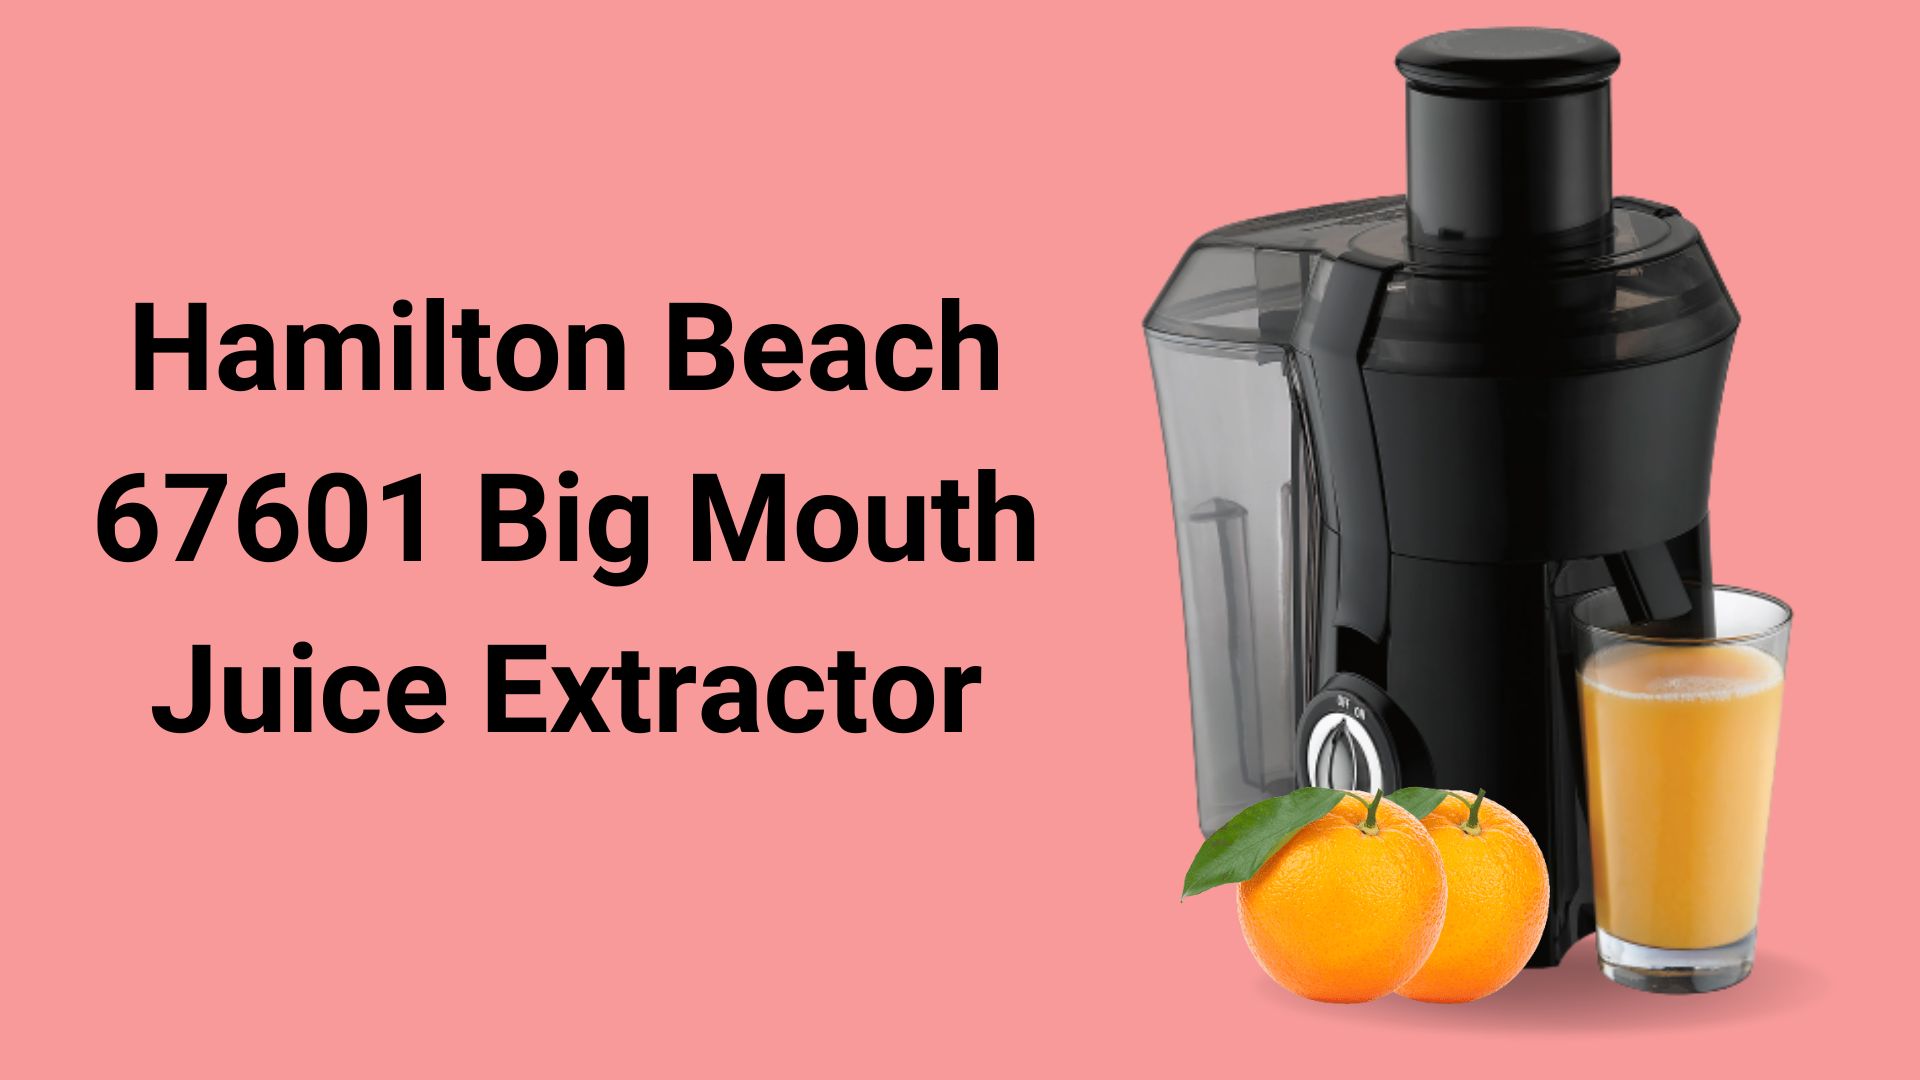 Hamilton Beach 67601 big mouth juicer